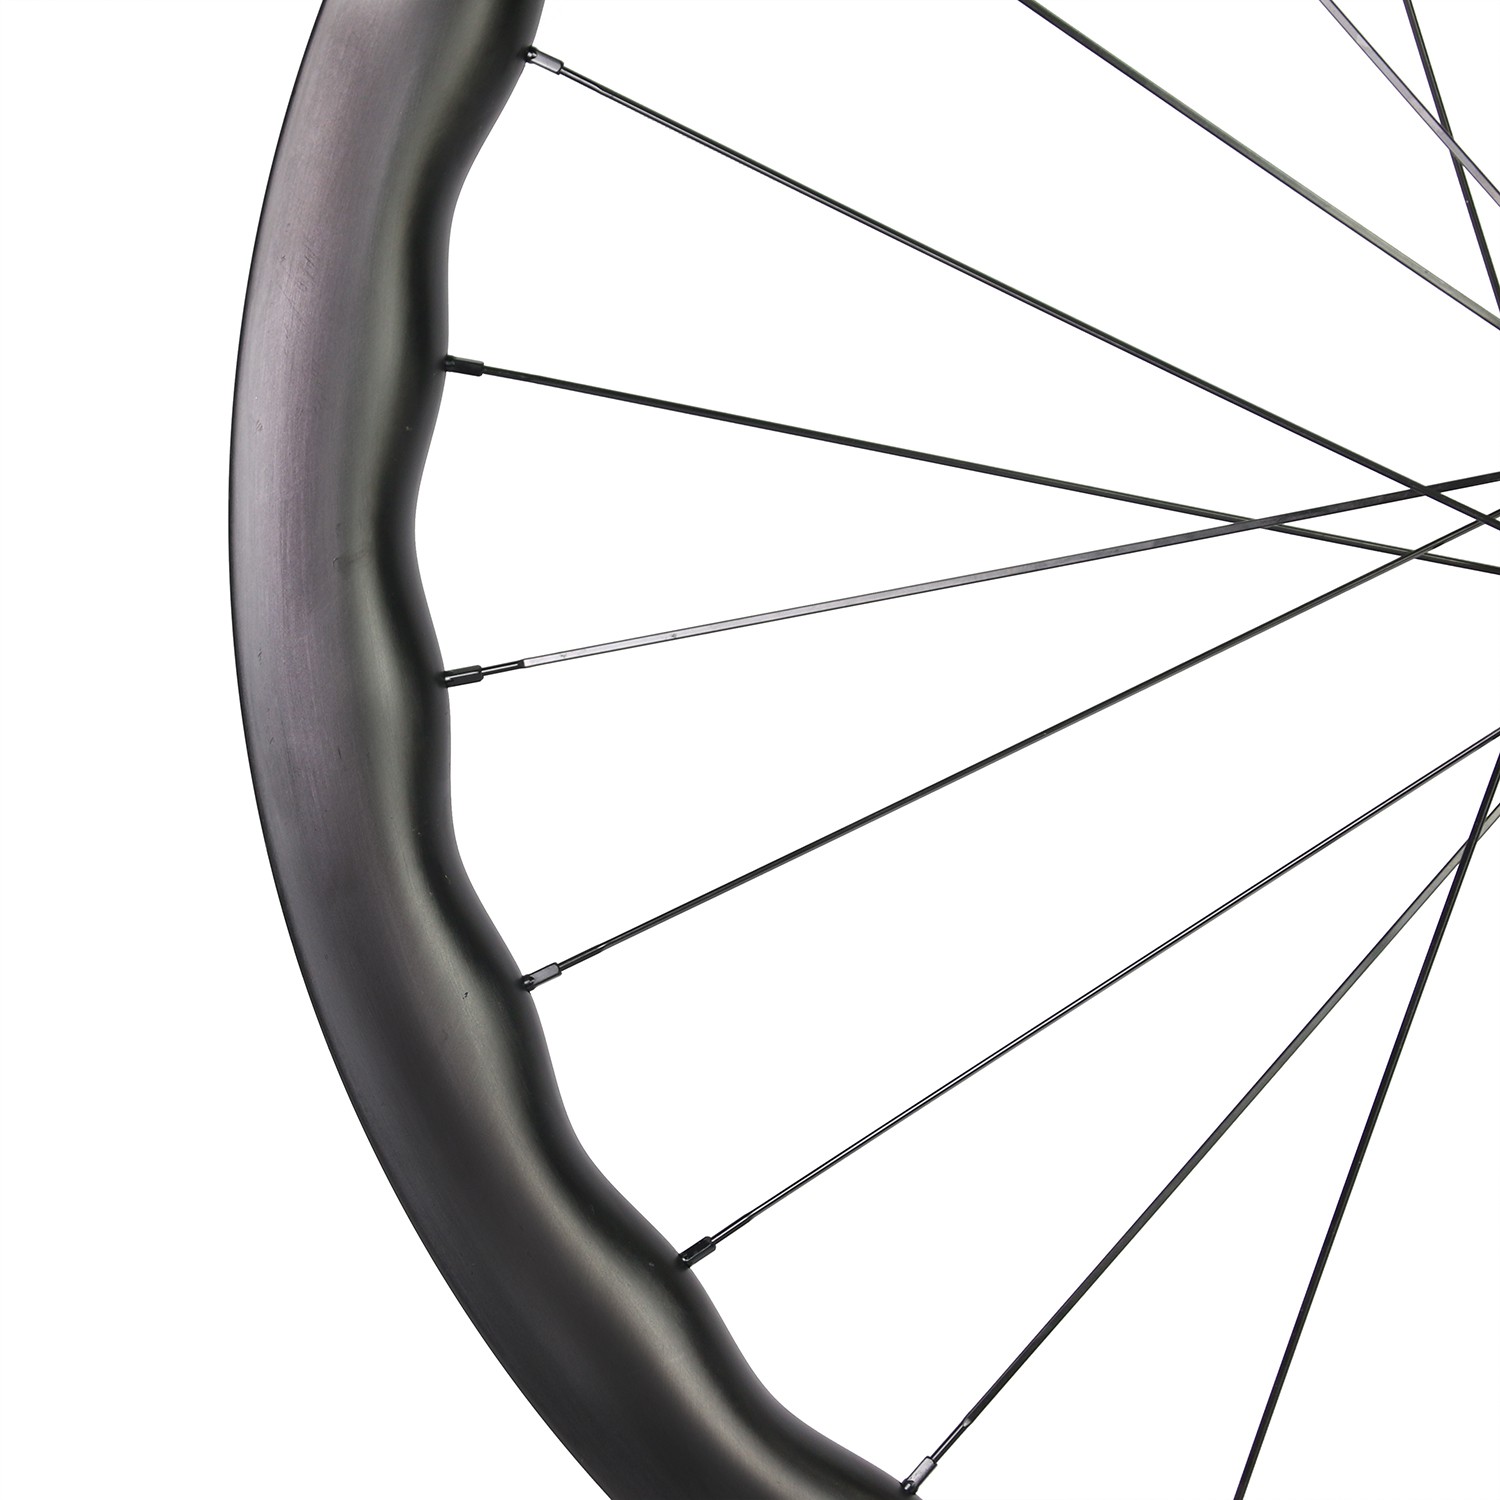 28mm Clincher Disc Brake Wheels Carbon Road Bike SR042